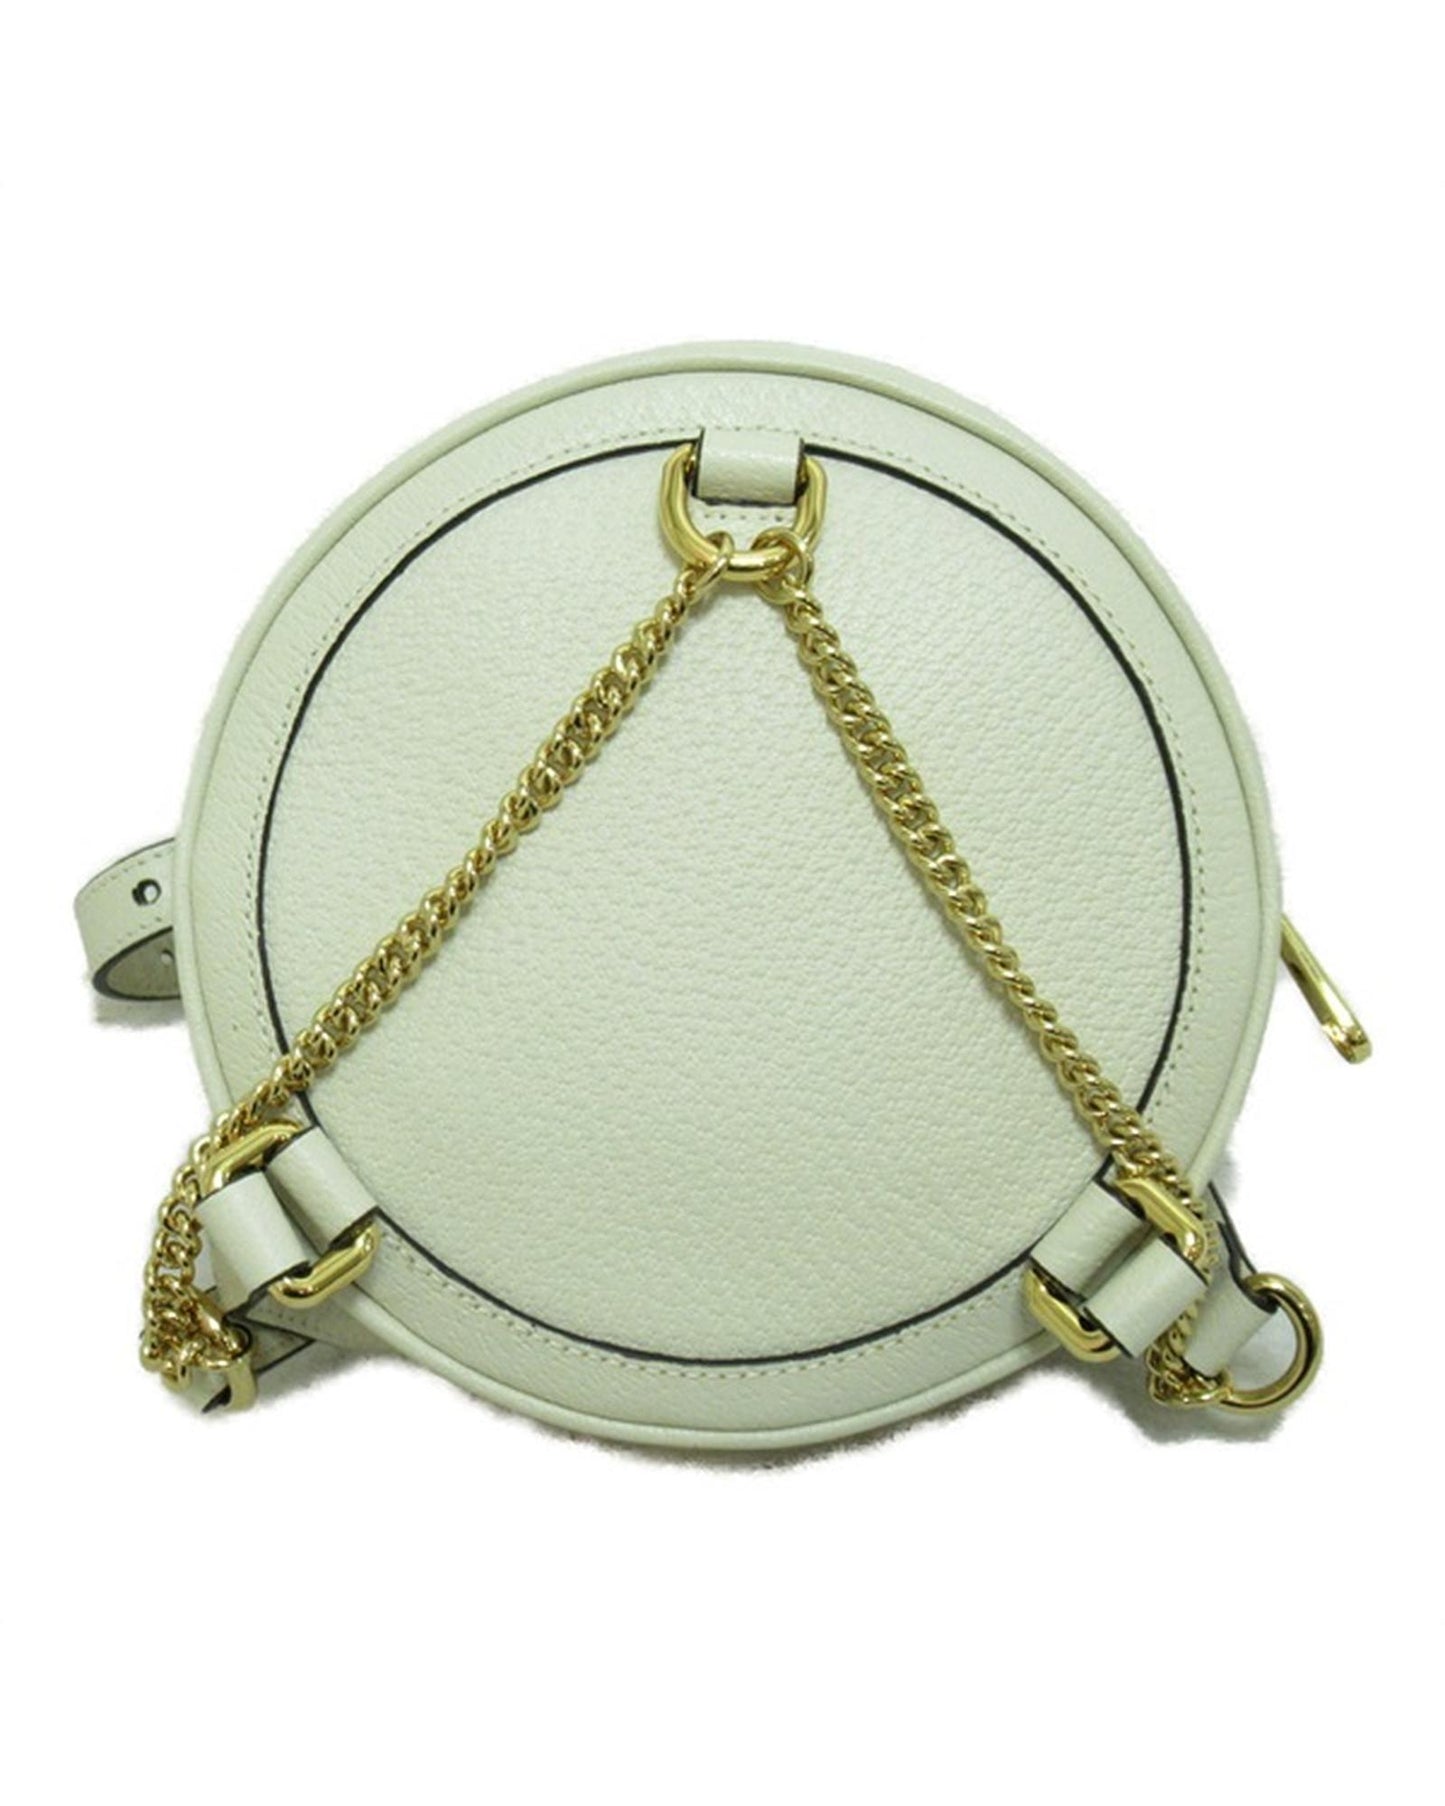 Gucci Women's Mini Backpack with Signature GG Design in White